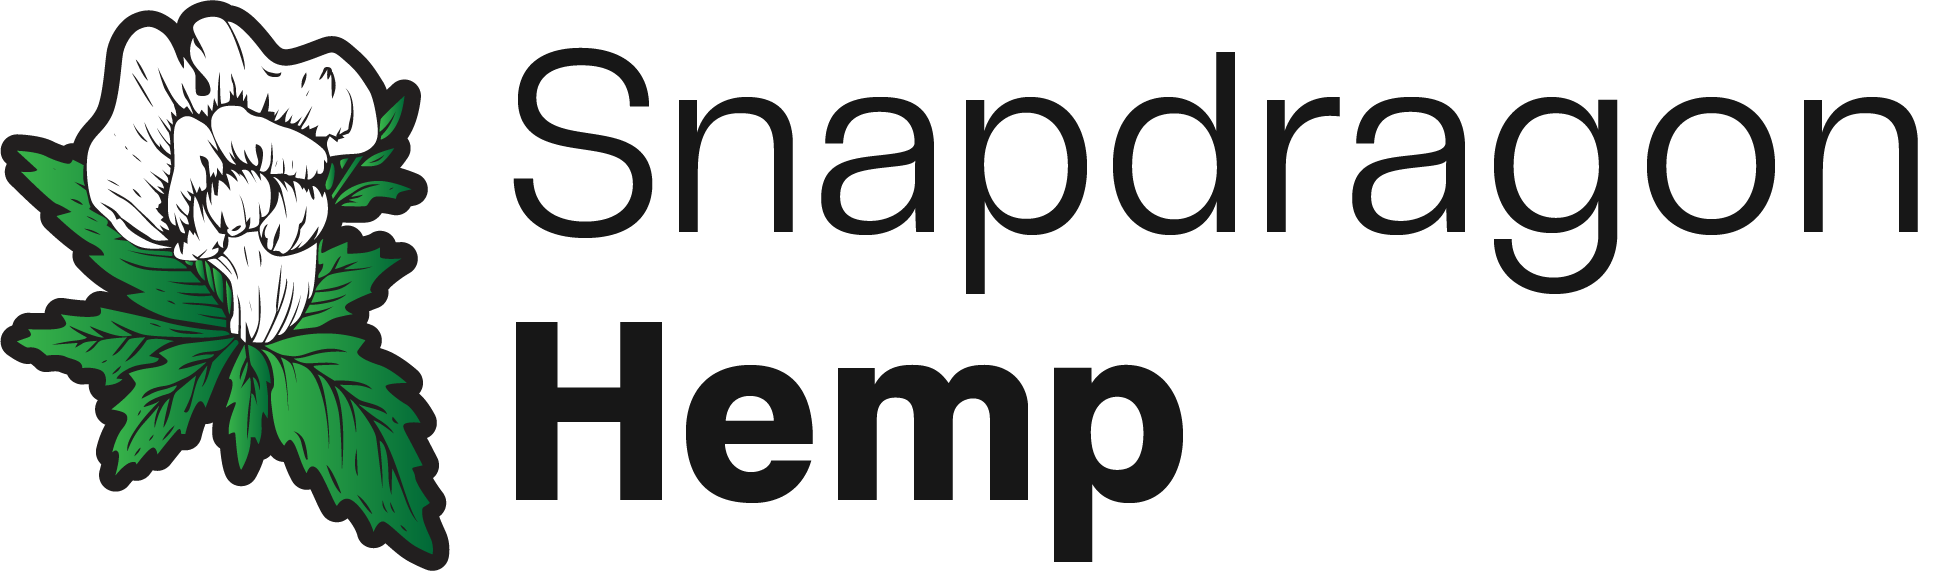 Snapdragon Hemp